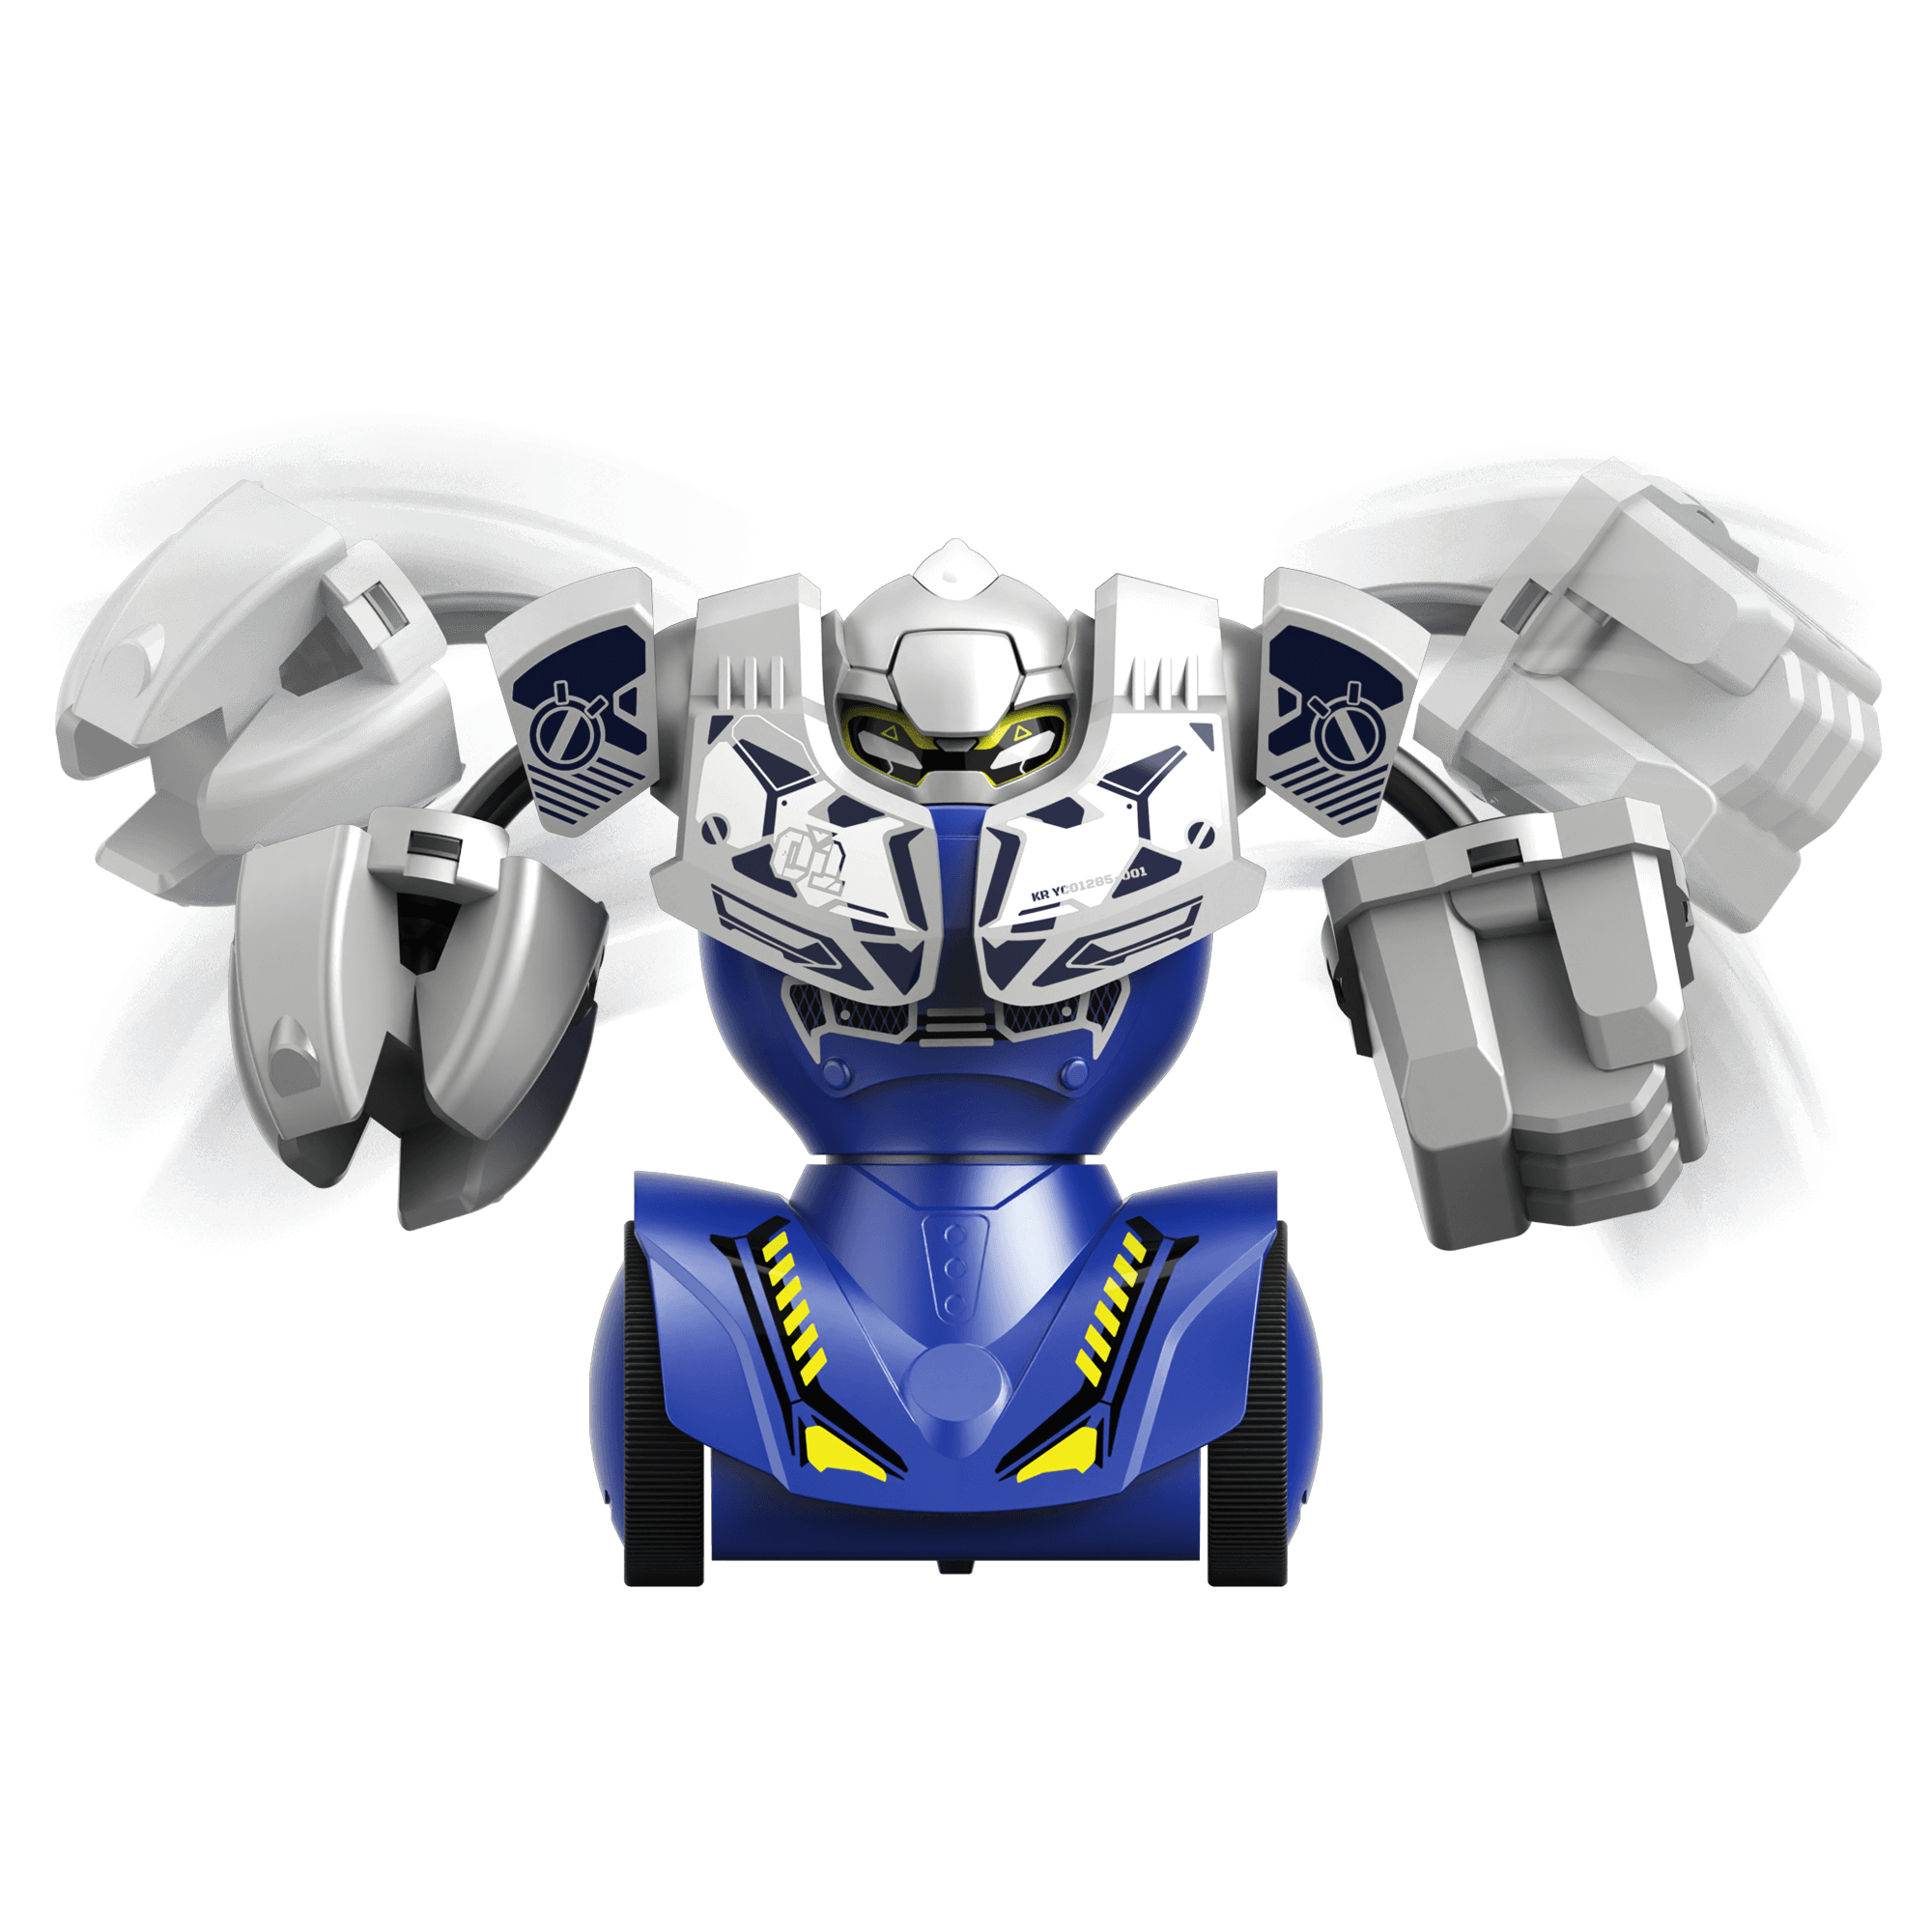 2 Robots de Combat - YCOO - Robot Kombat Bi Pack Ycoo : King Jouet